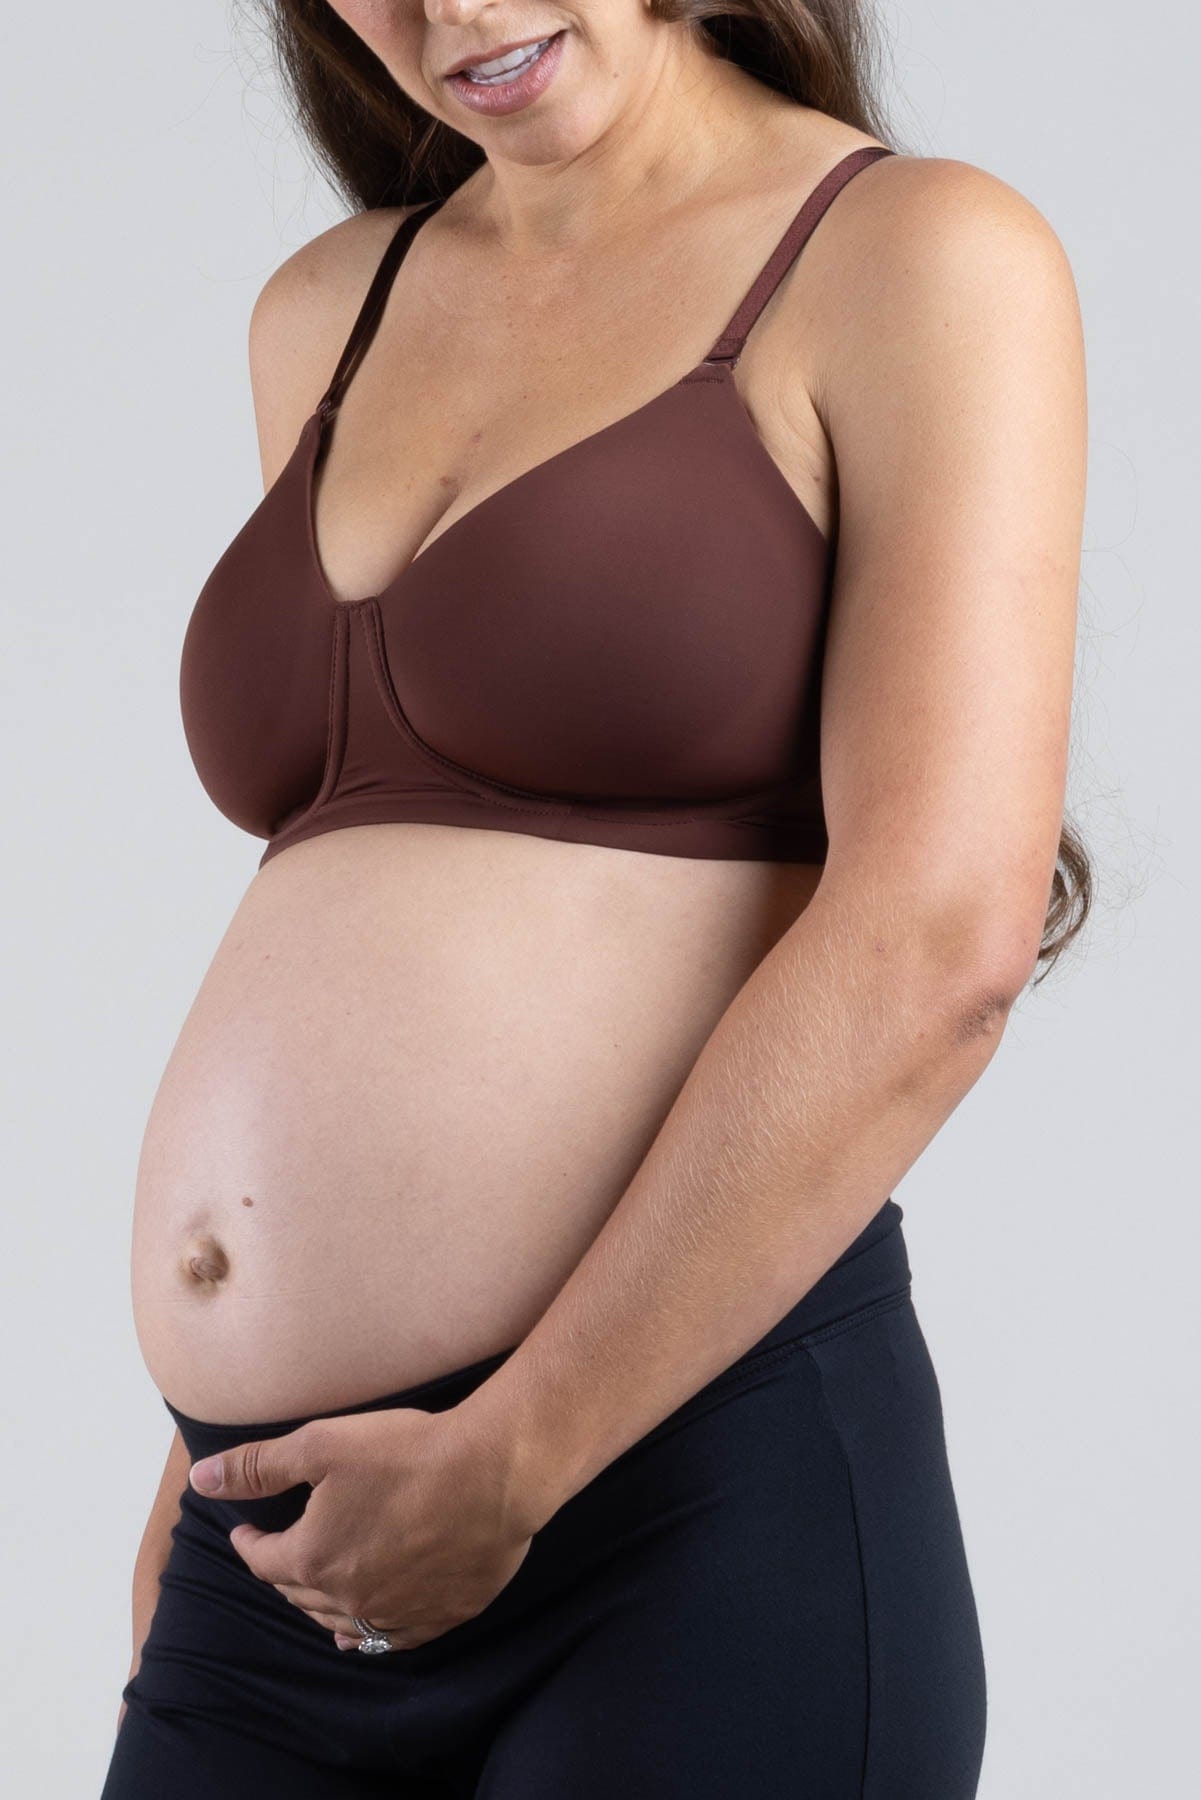 Women Maternity Nursing Bras Set Pregnant Breastfeeding Pregnancy